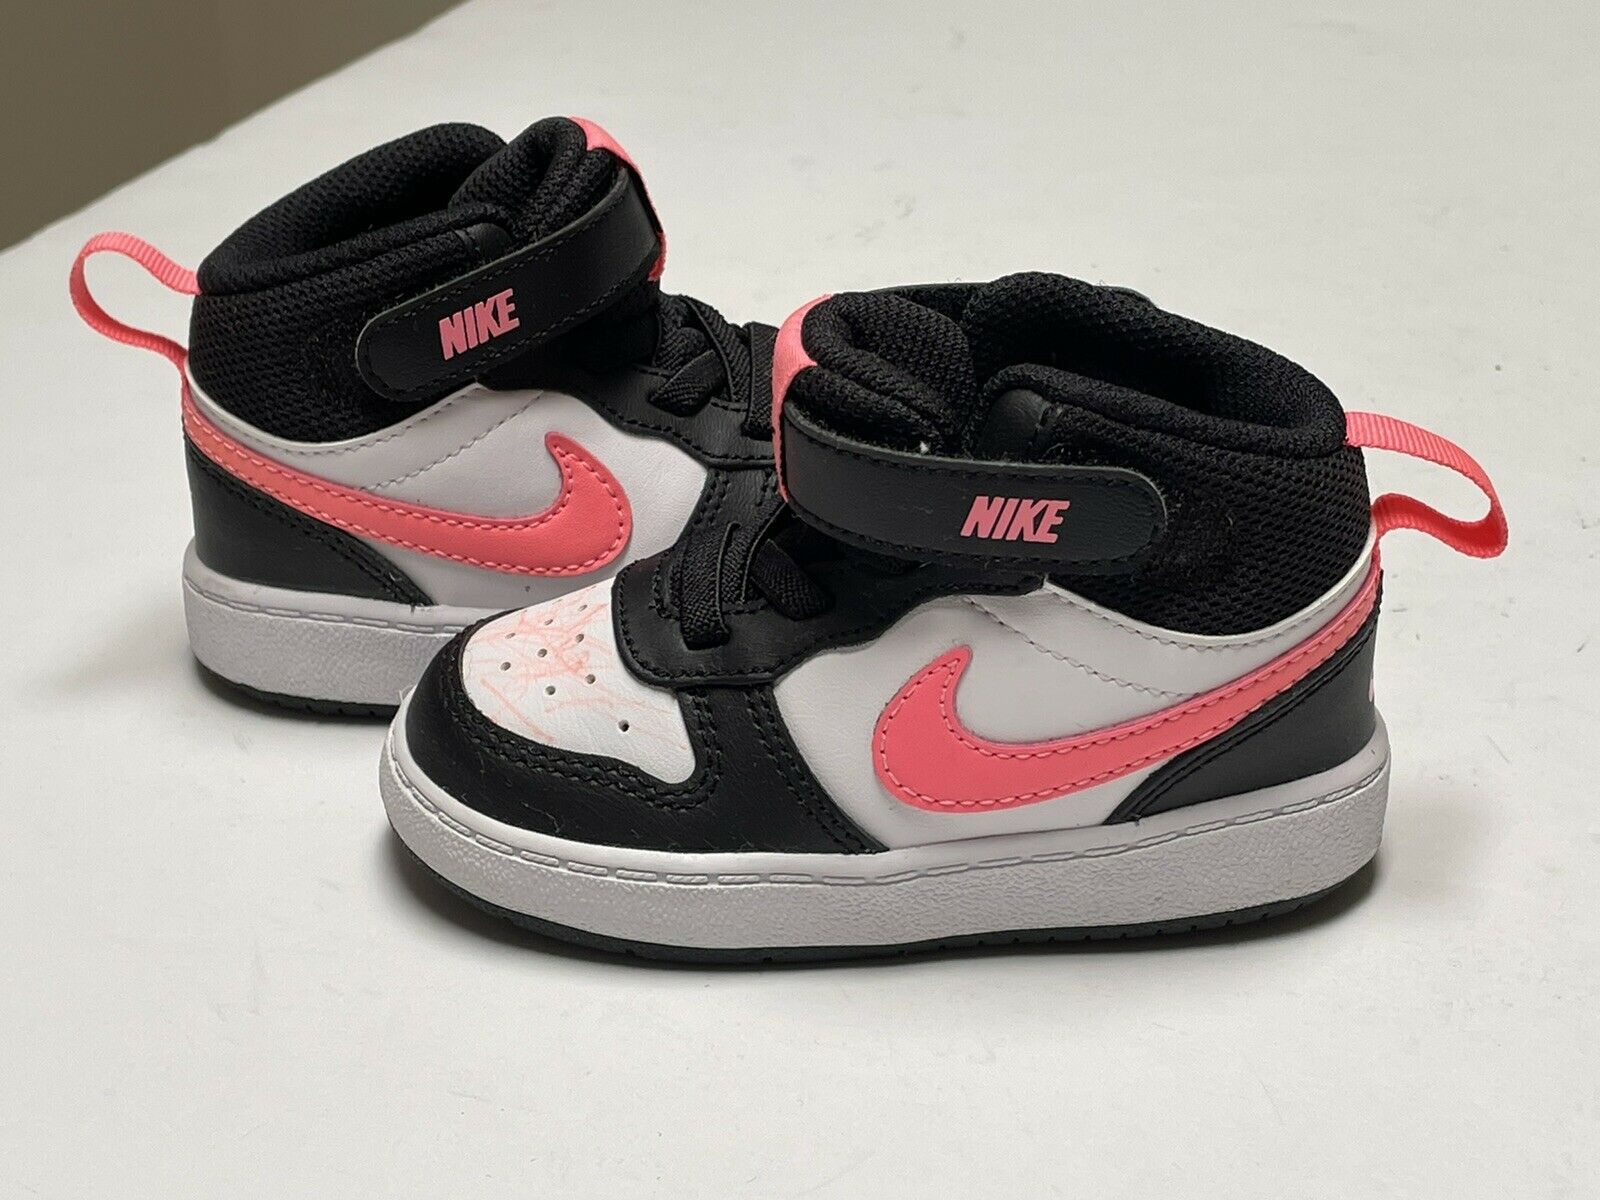 Nike COURT BOROUGH MID 2 Toddler infant Black Pink CD7784-005 Shoe Size 6c